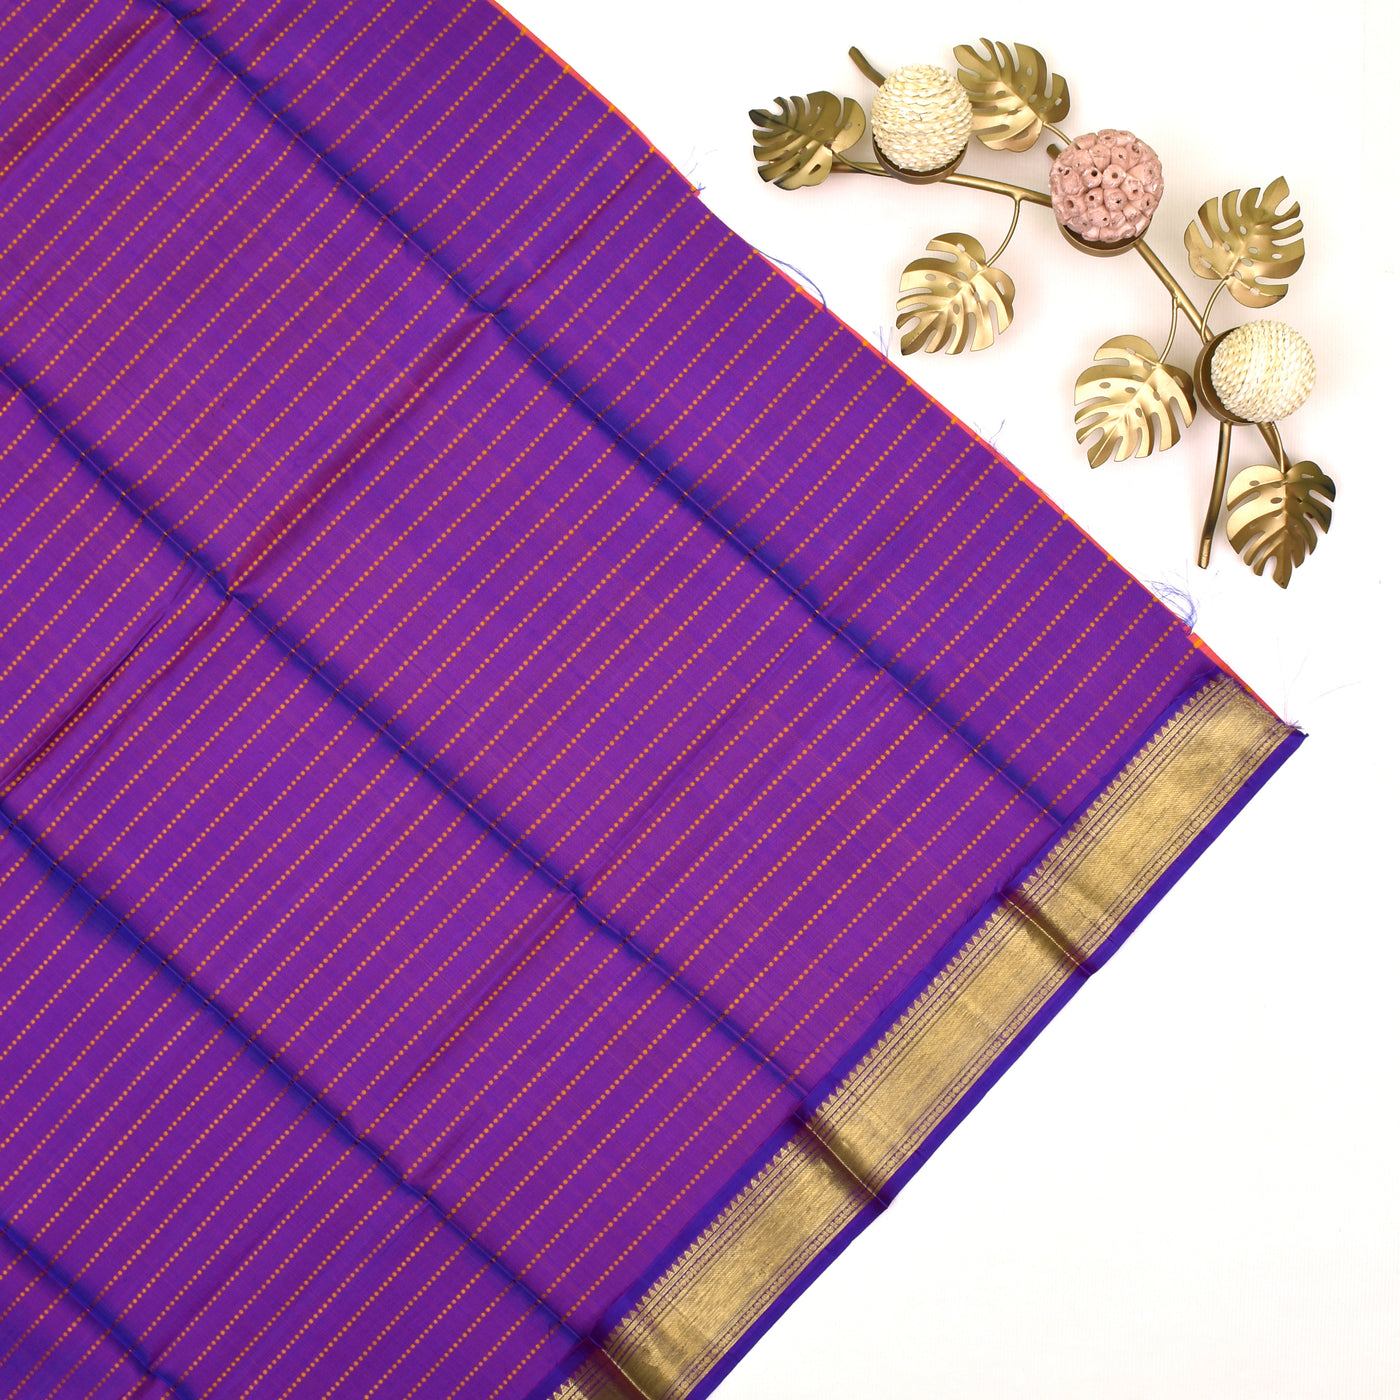 Off White Tissue Tussar Saree with Purple Pallu and Border